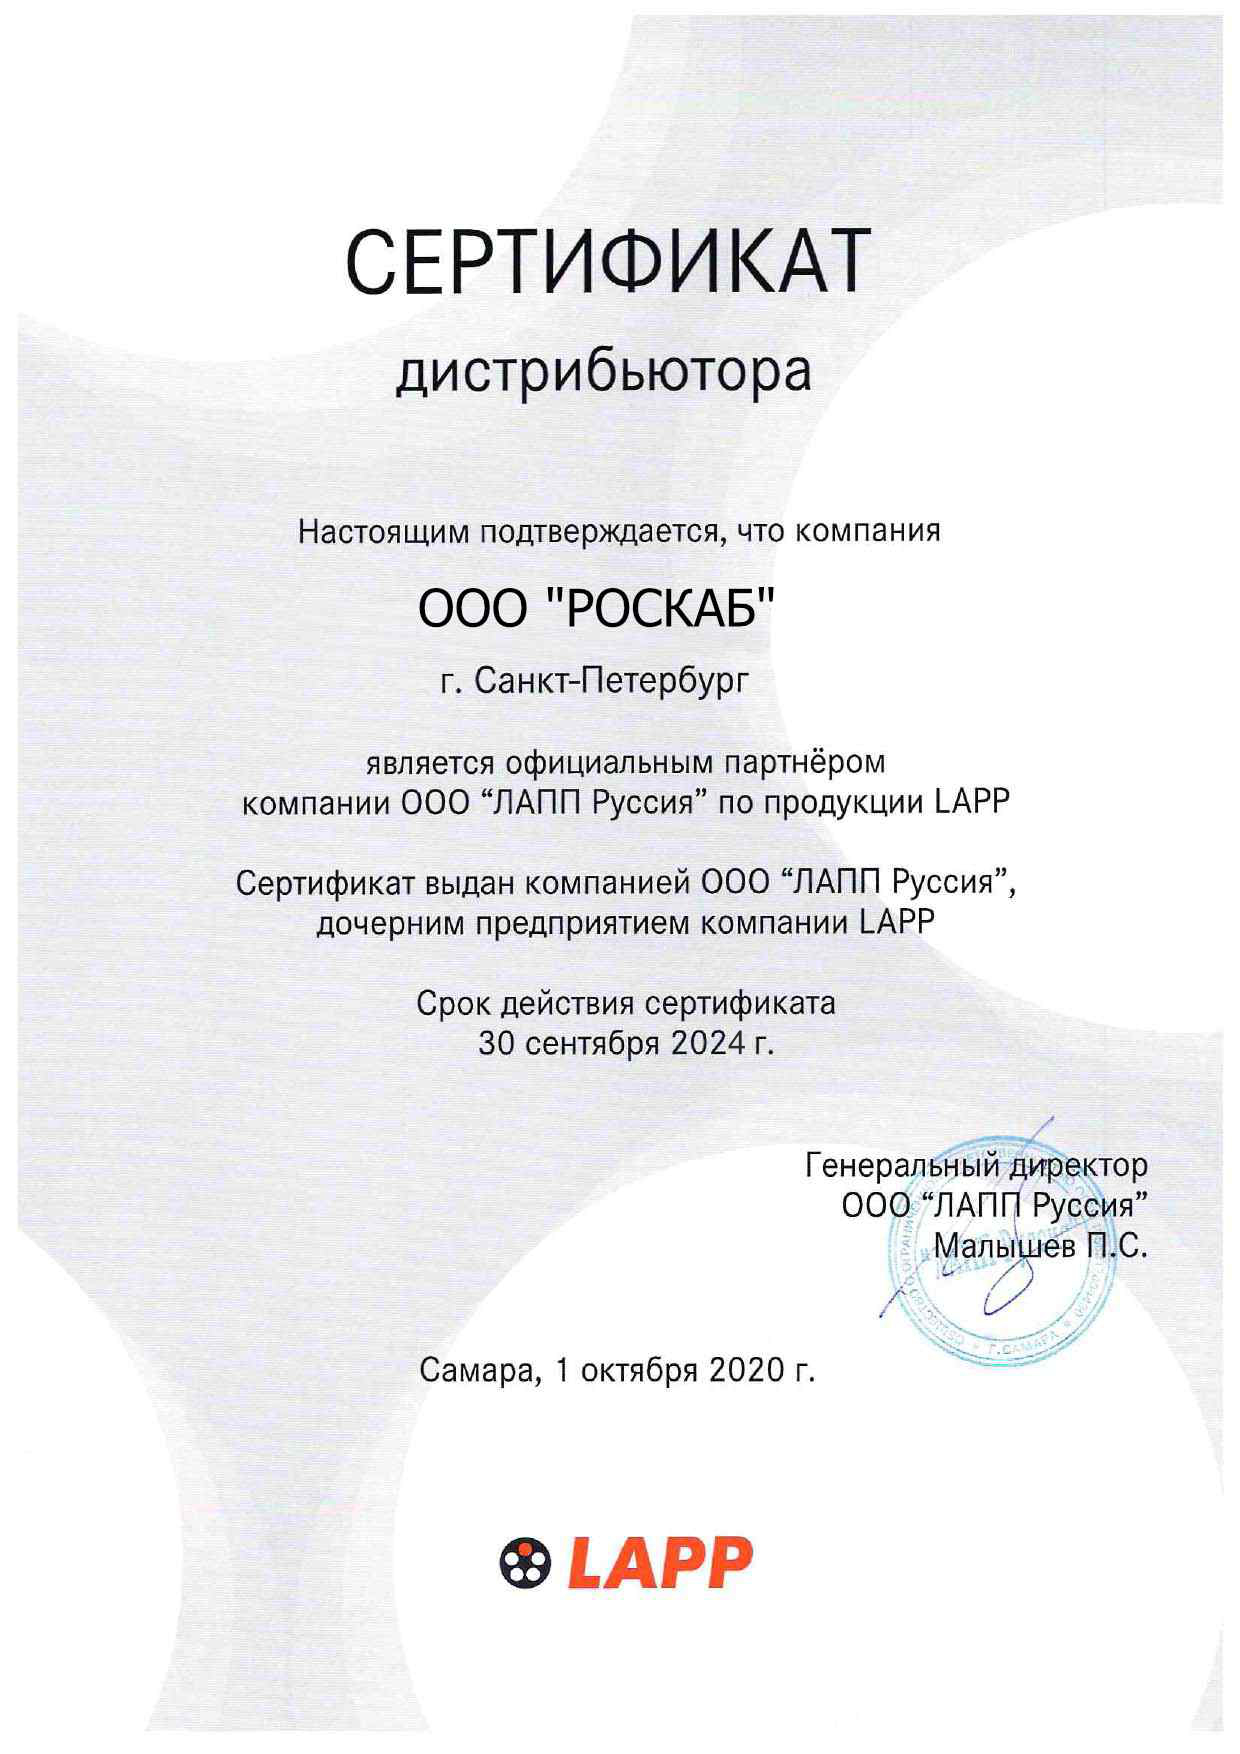 Сертификат дистрибьютора LAPP